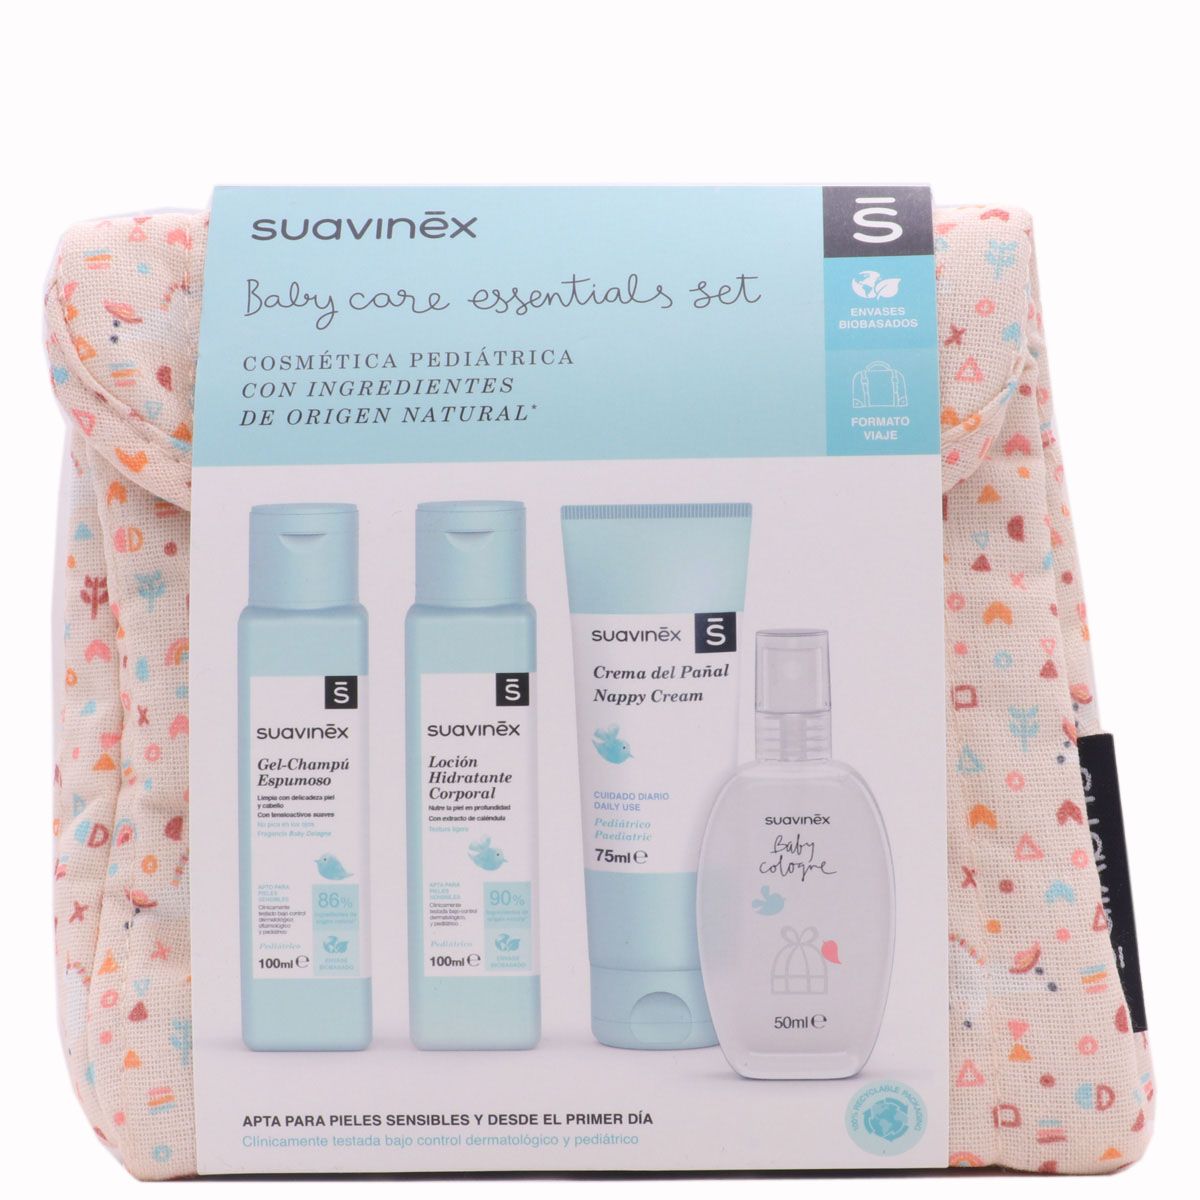 Suavinex gel-champú syndet 500ml + crema pañal 75ml - Farmacia en Casa  Online